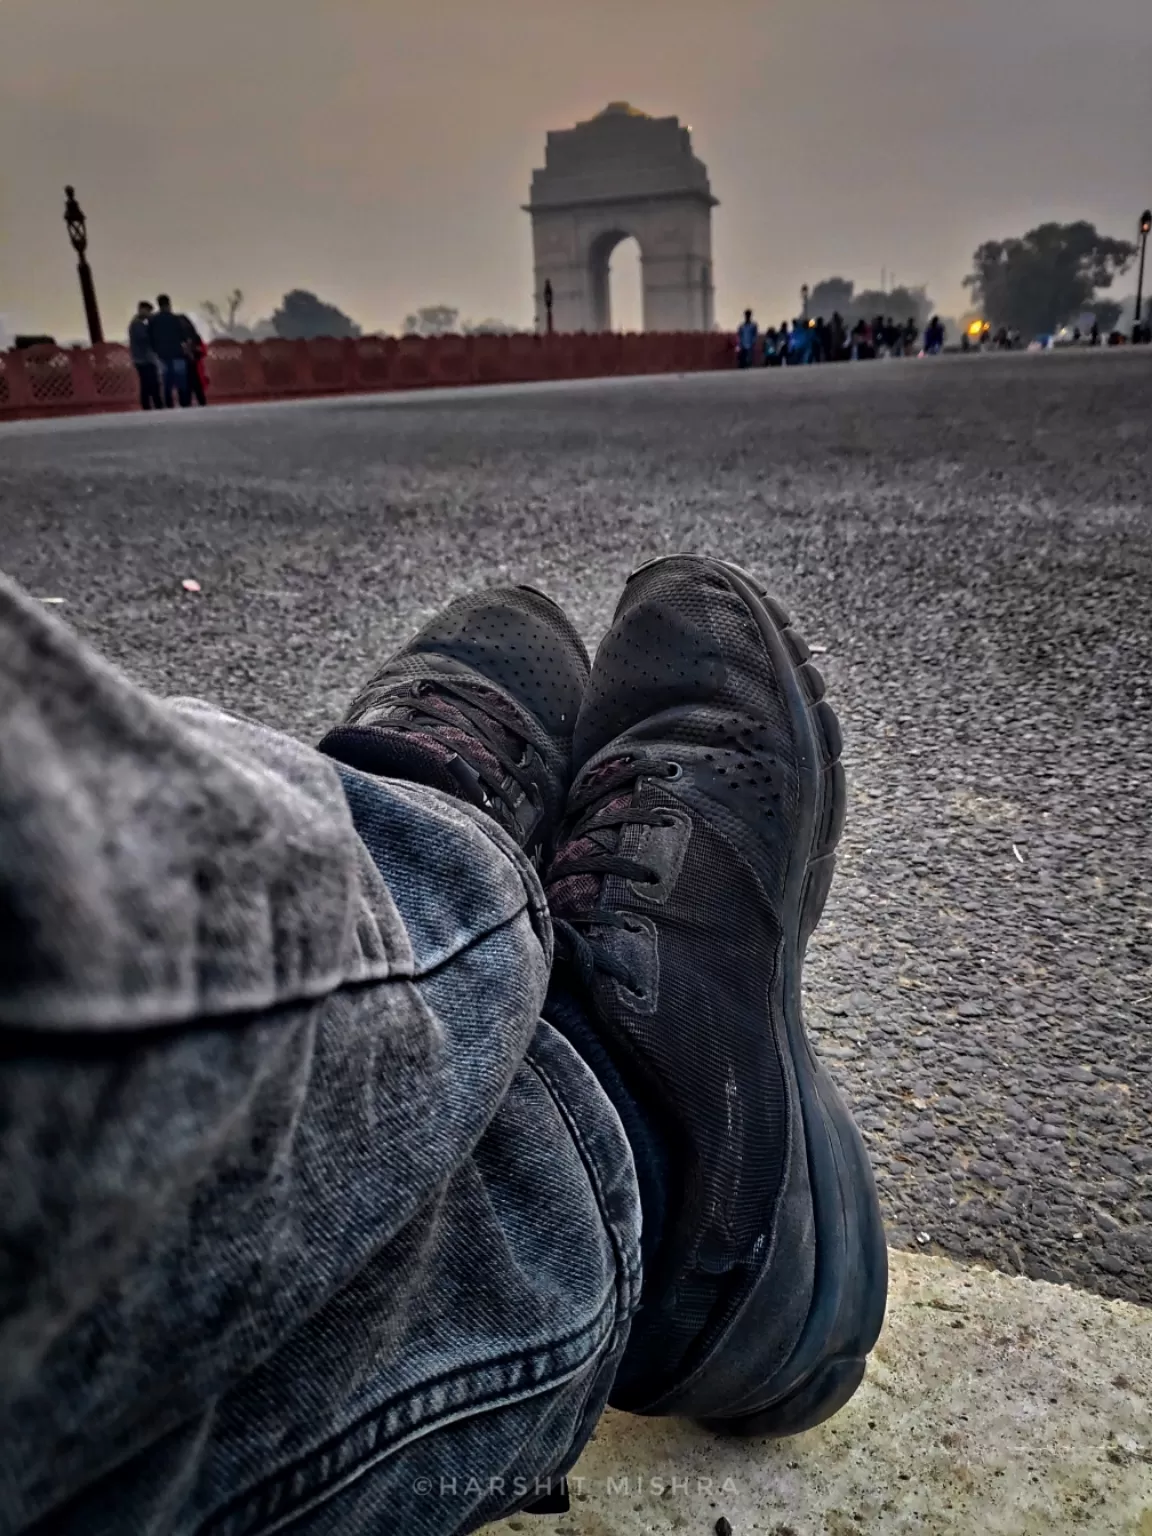 Photo of India Gate By हर्षित मिश्र